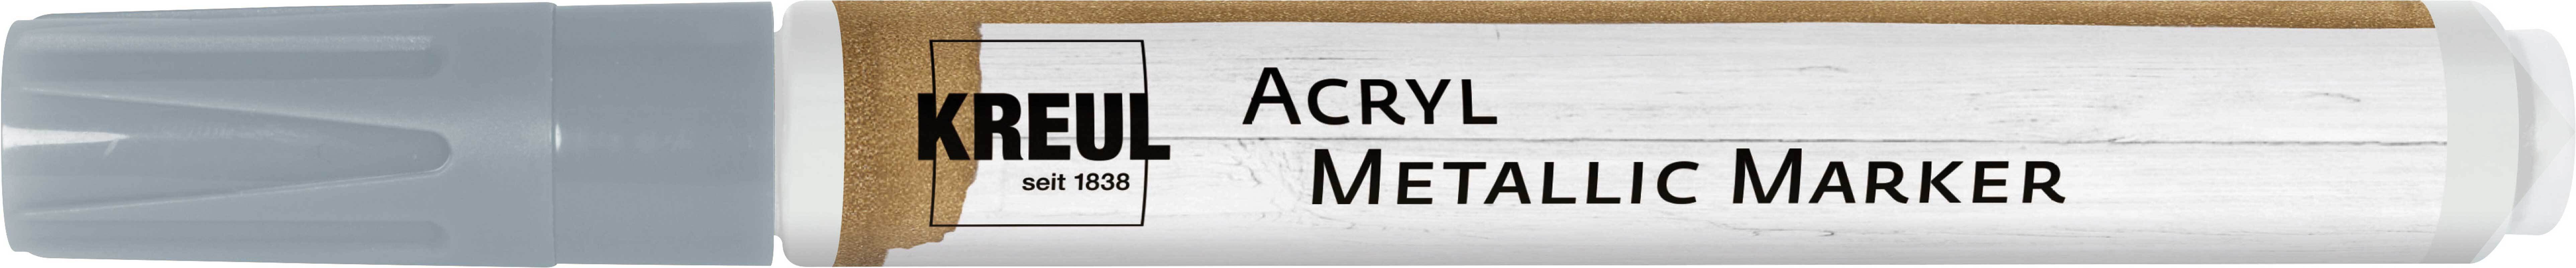 Acryl metallic marker - medium, zilver